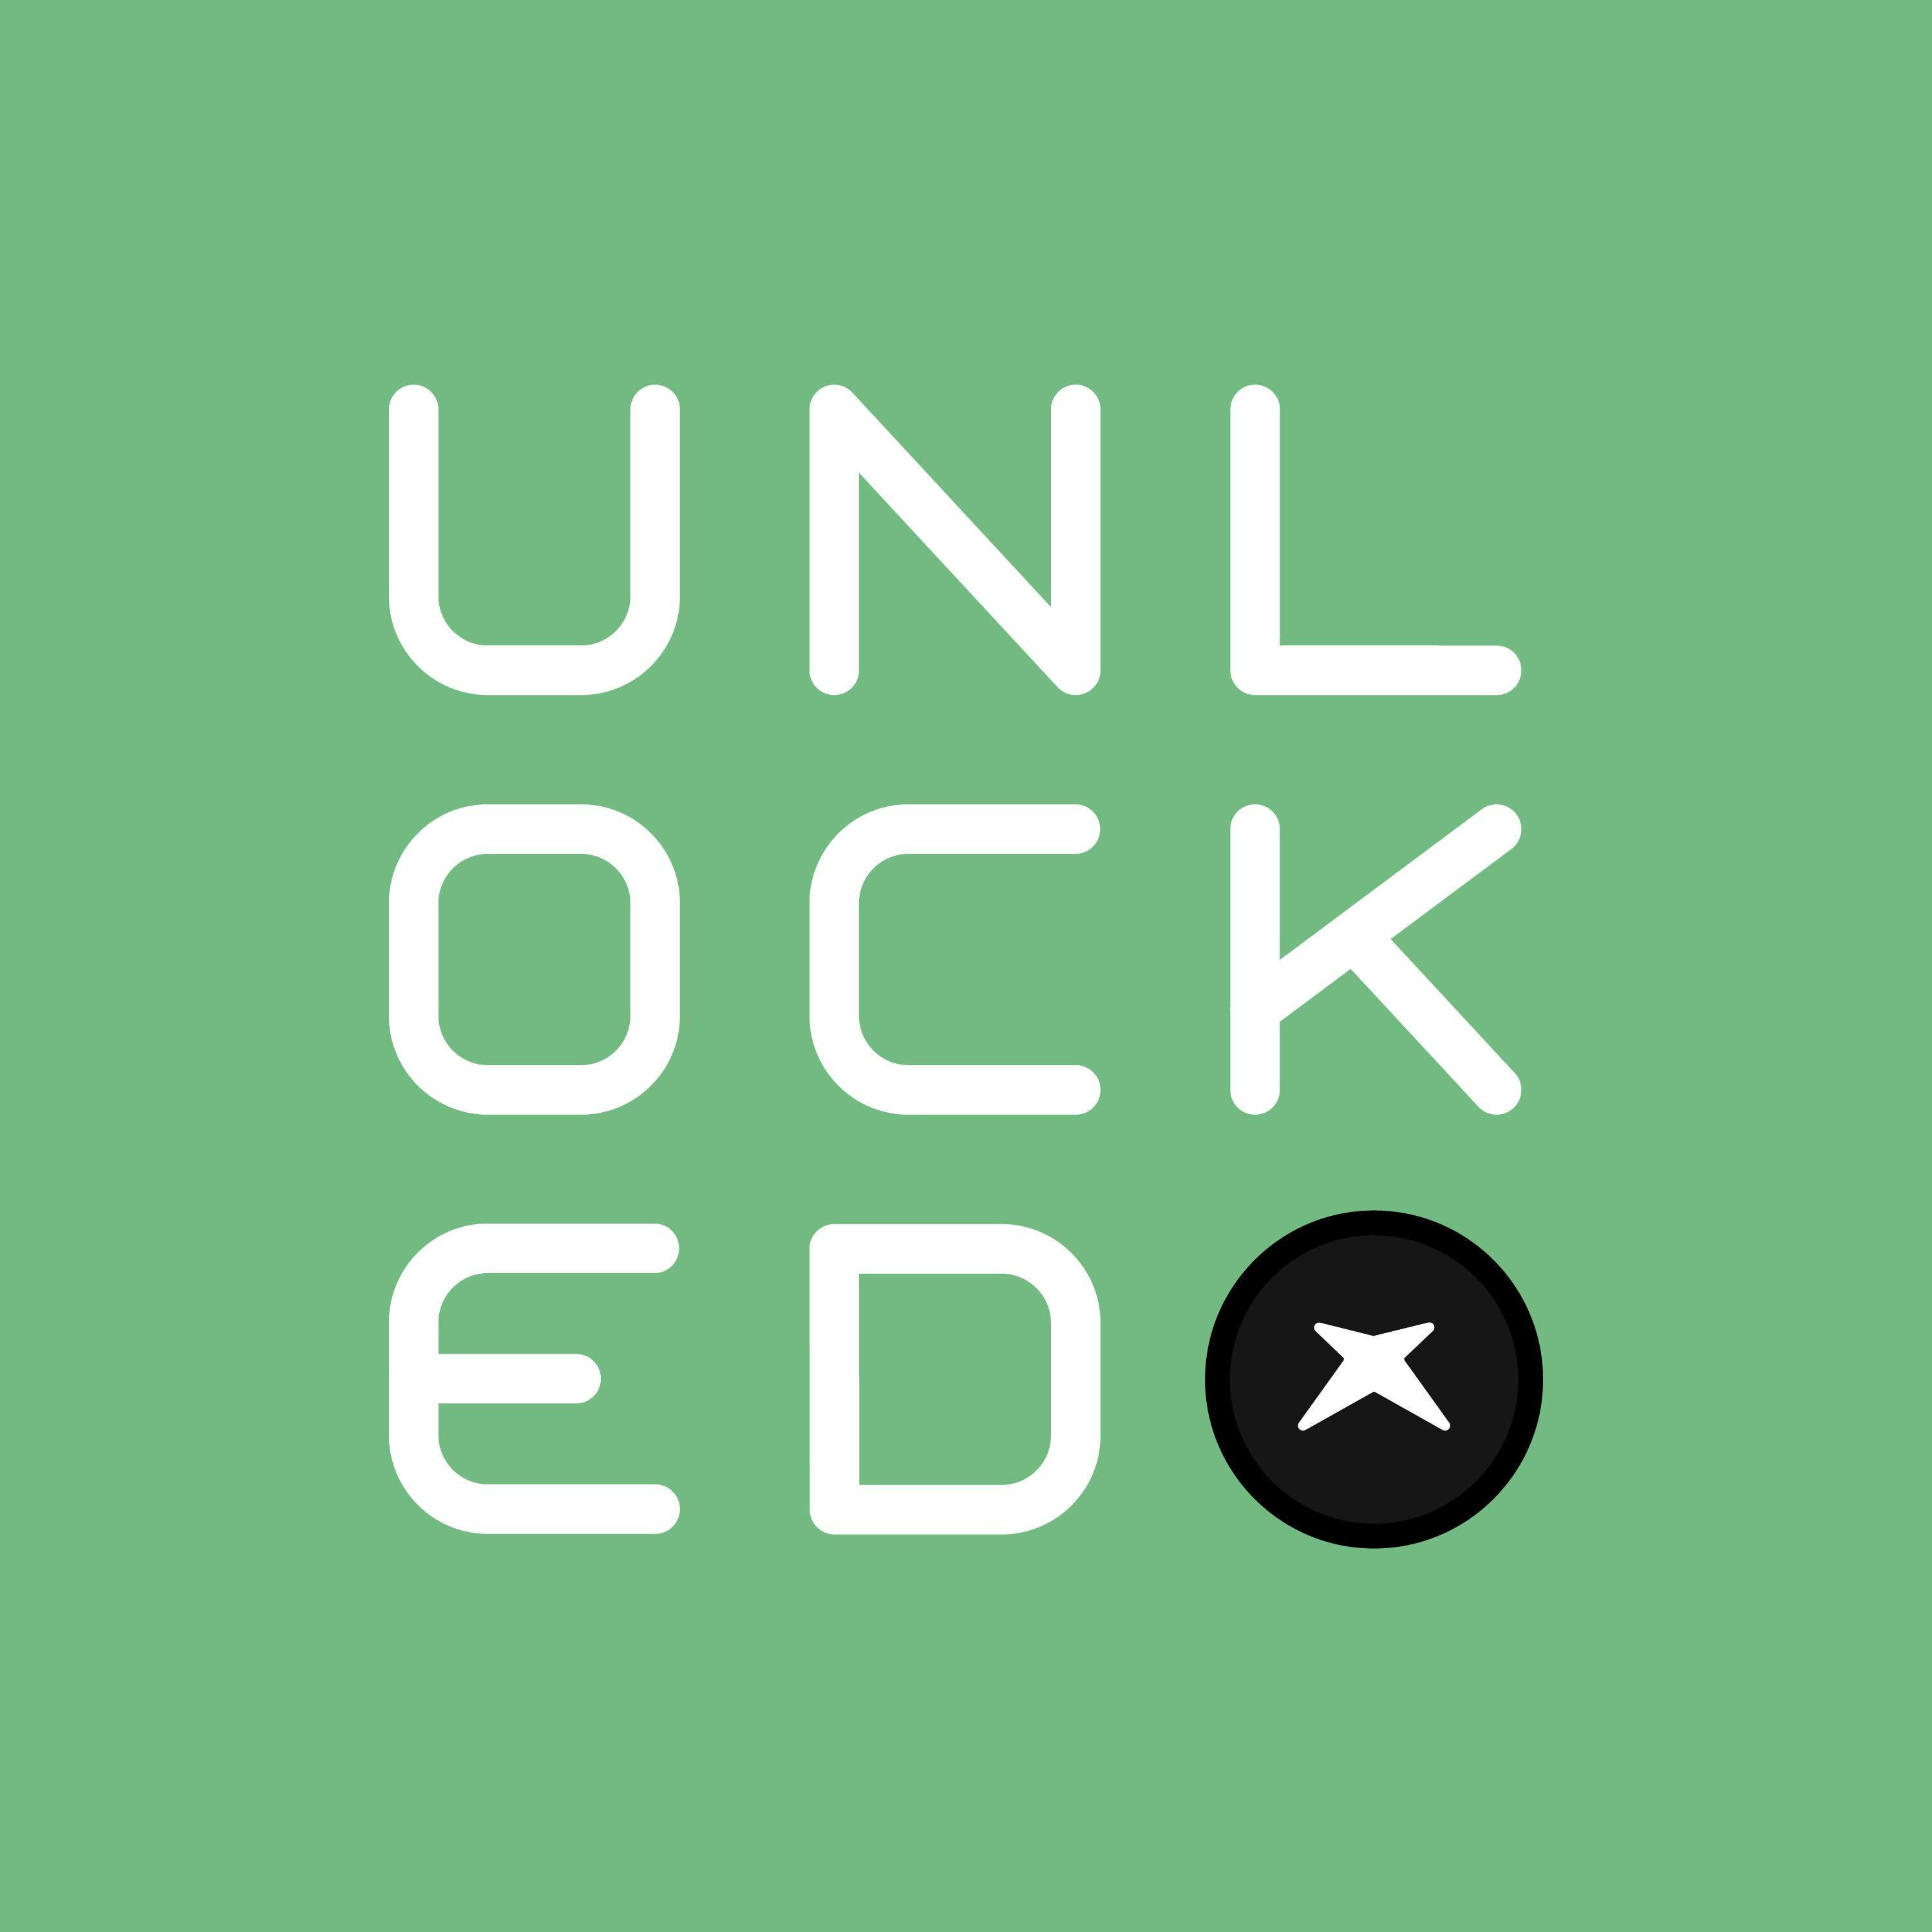 Podcast Unlocked Episode 005: Gears of War 3 Multiplayer Beta